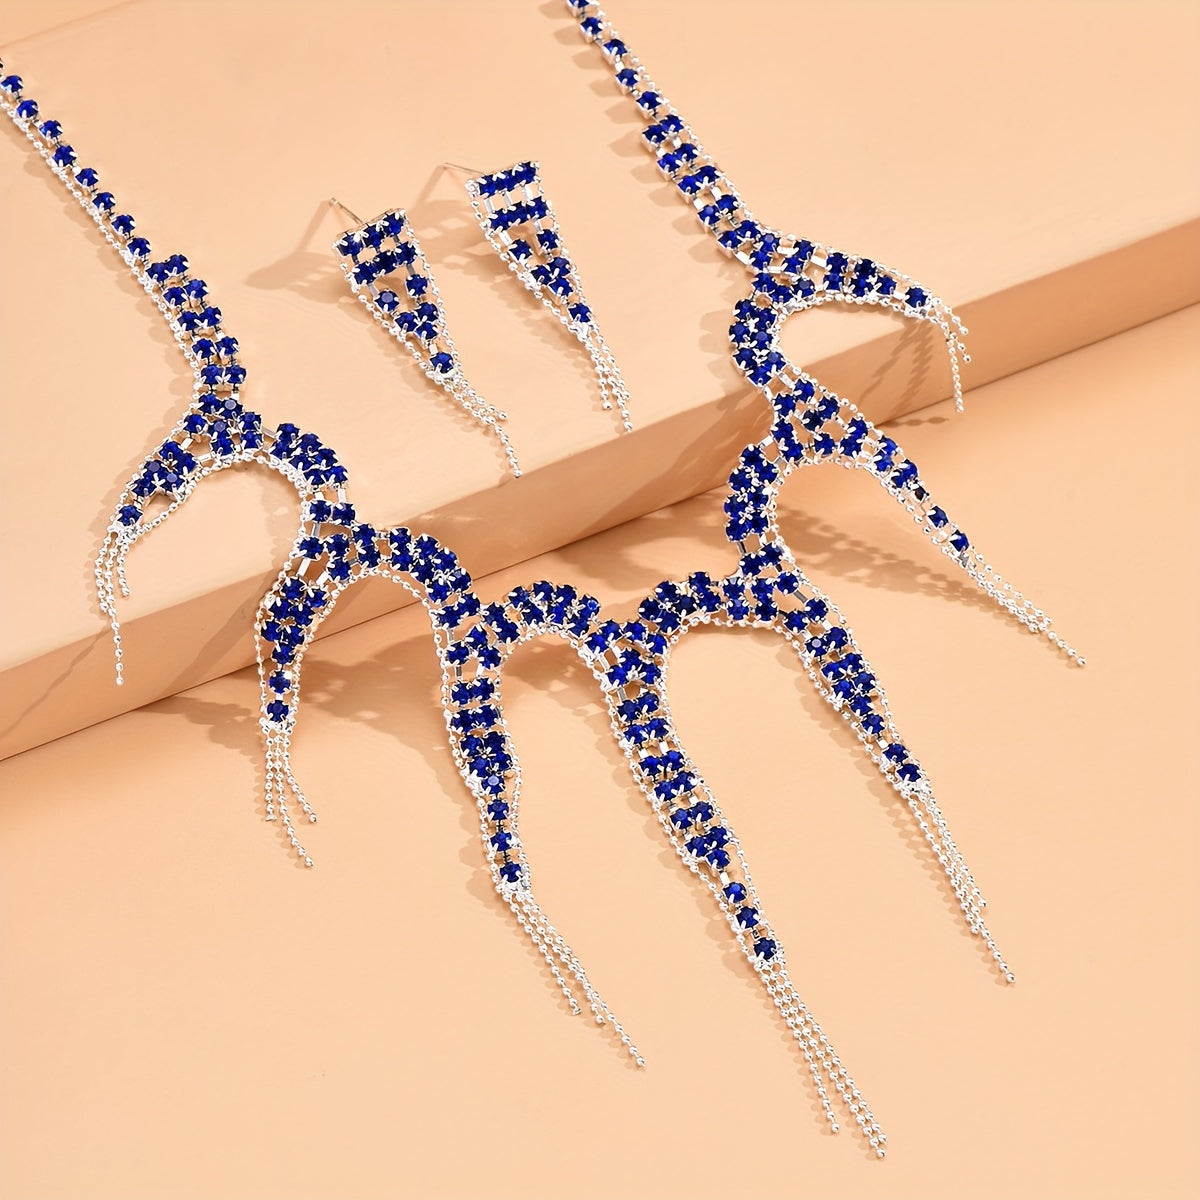 Elegant Jewelry Set | Inlaid Shining Rhinestone Claw Design